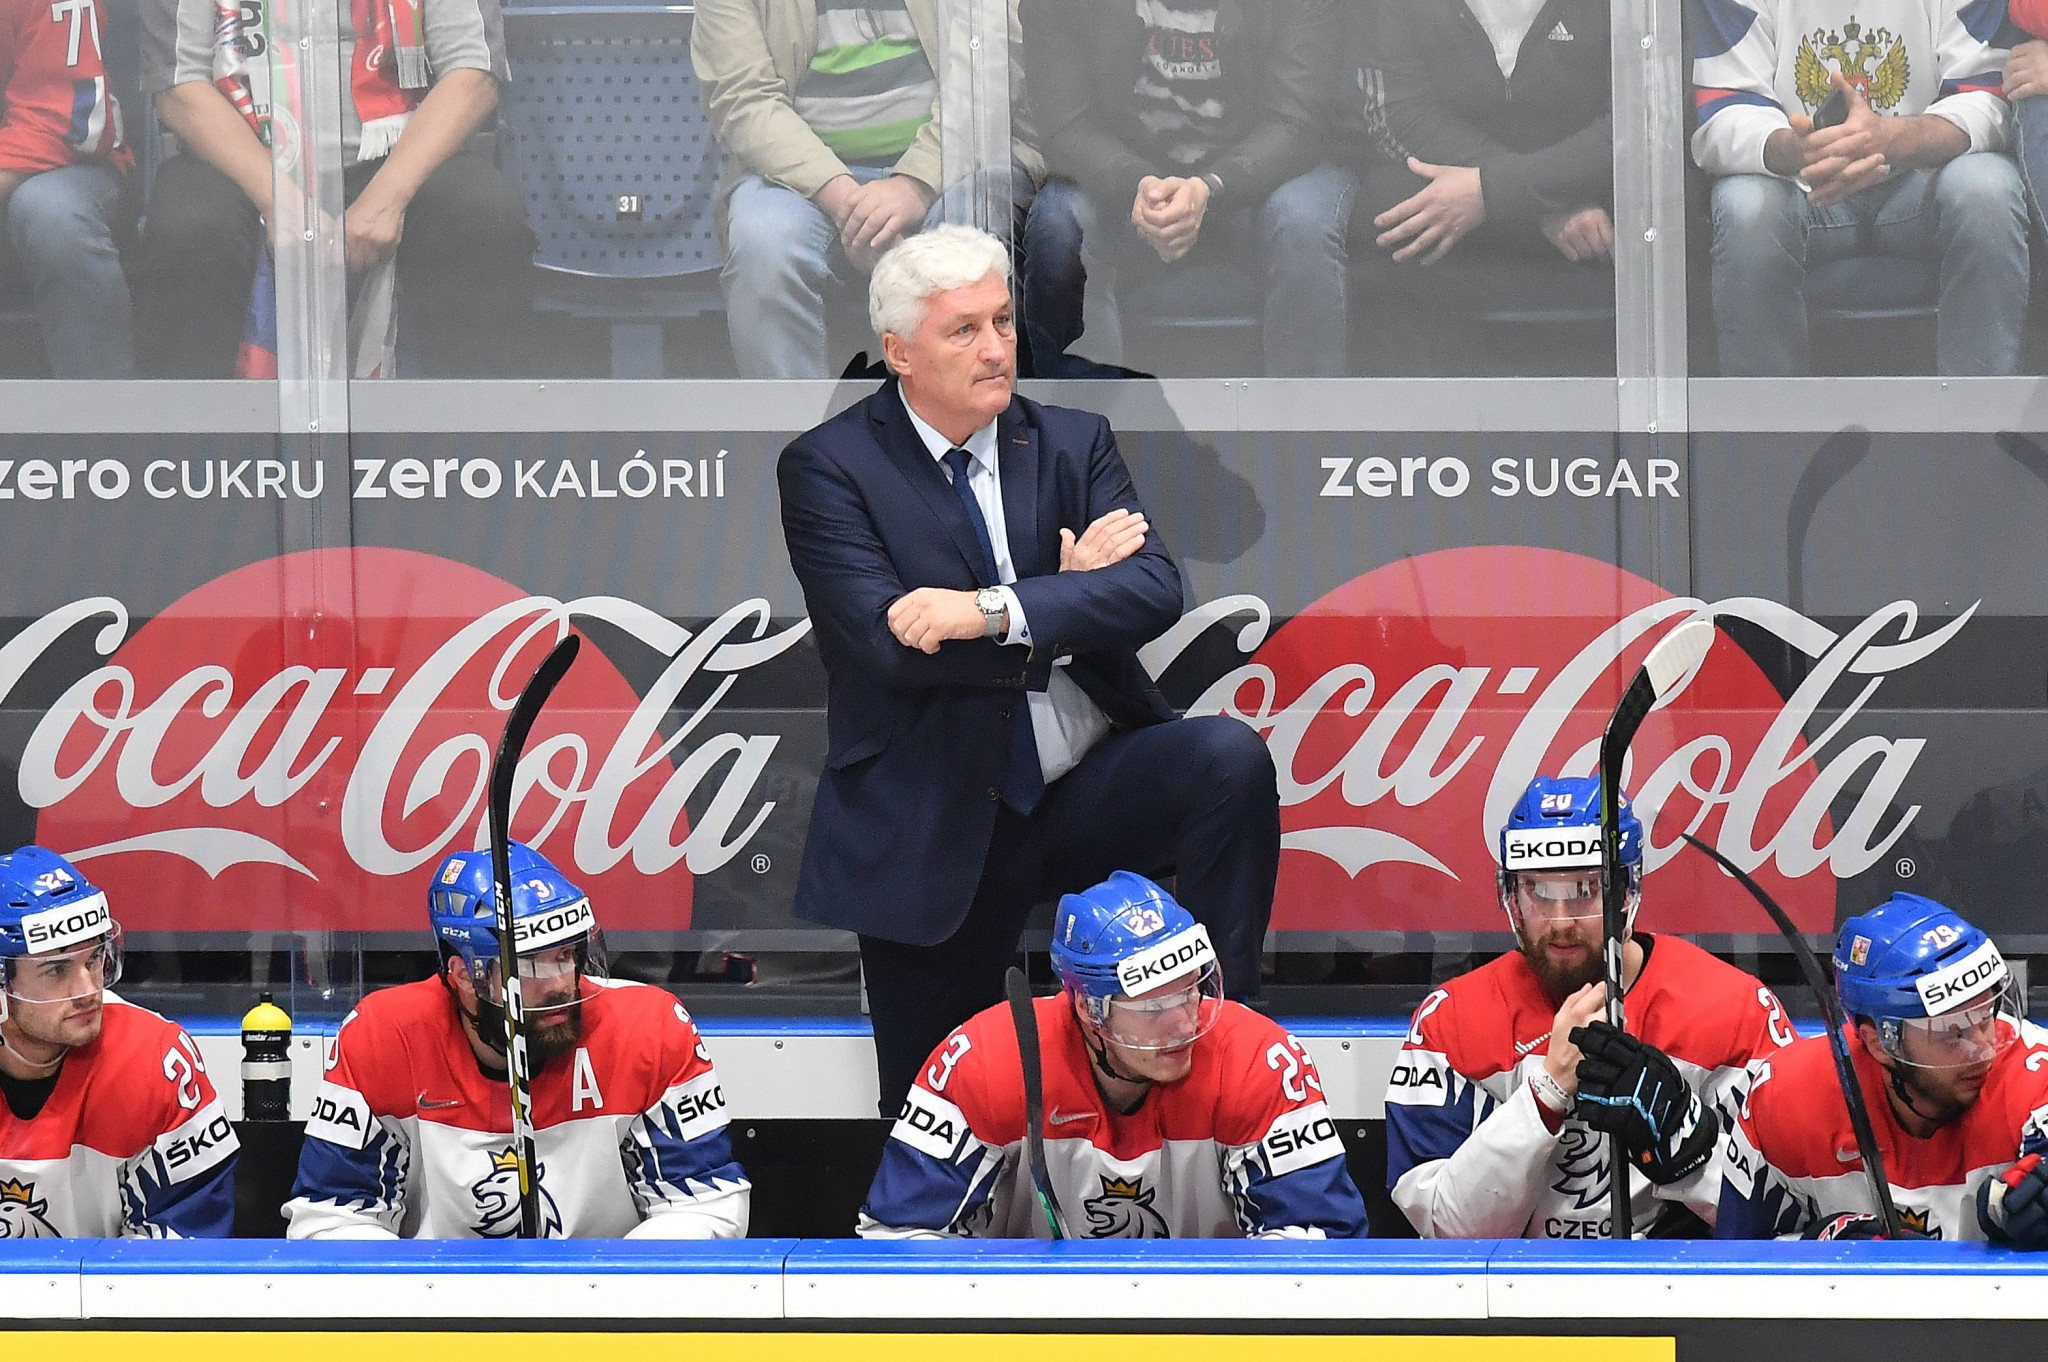 Riha to continue as head coach of Czech Republic men's national ice hockey team